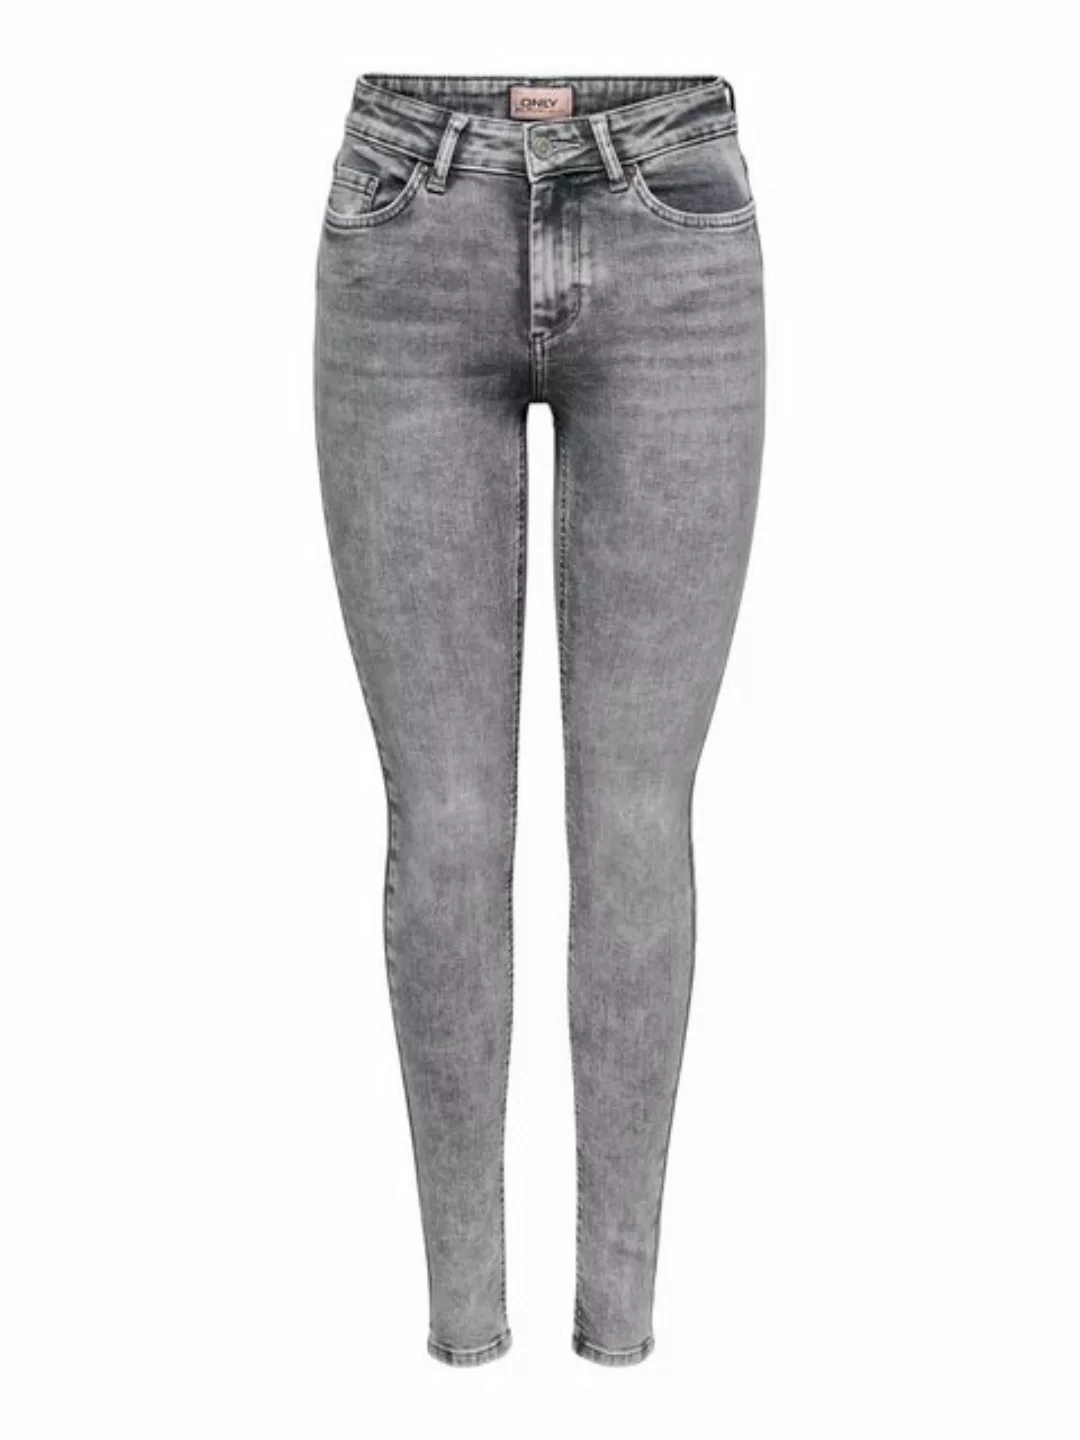 Only Damen Jeans ONLBLUSH MID SK TAI918 - Skinny Fit - Grau - Light Grey De günstig online kaufen